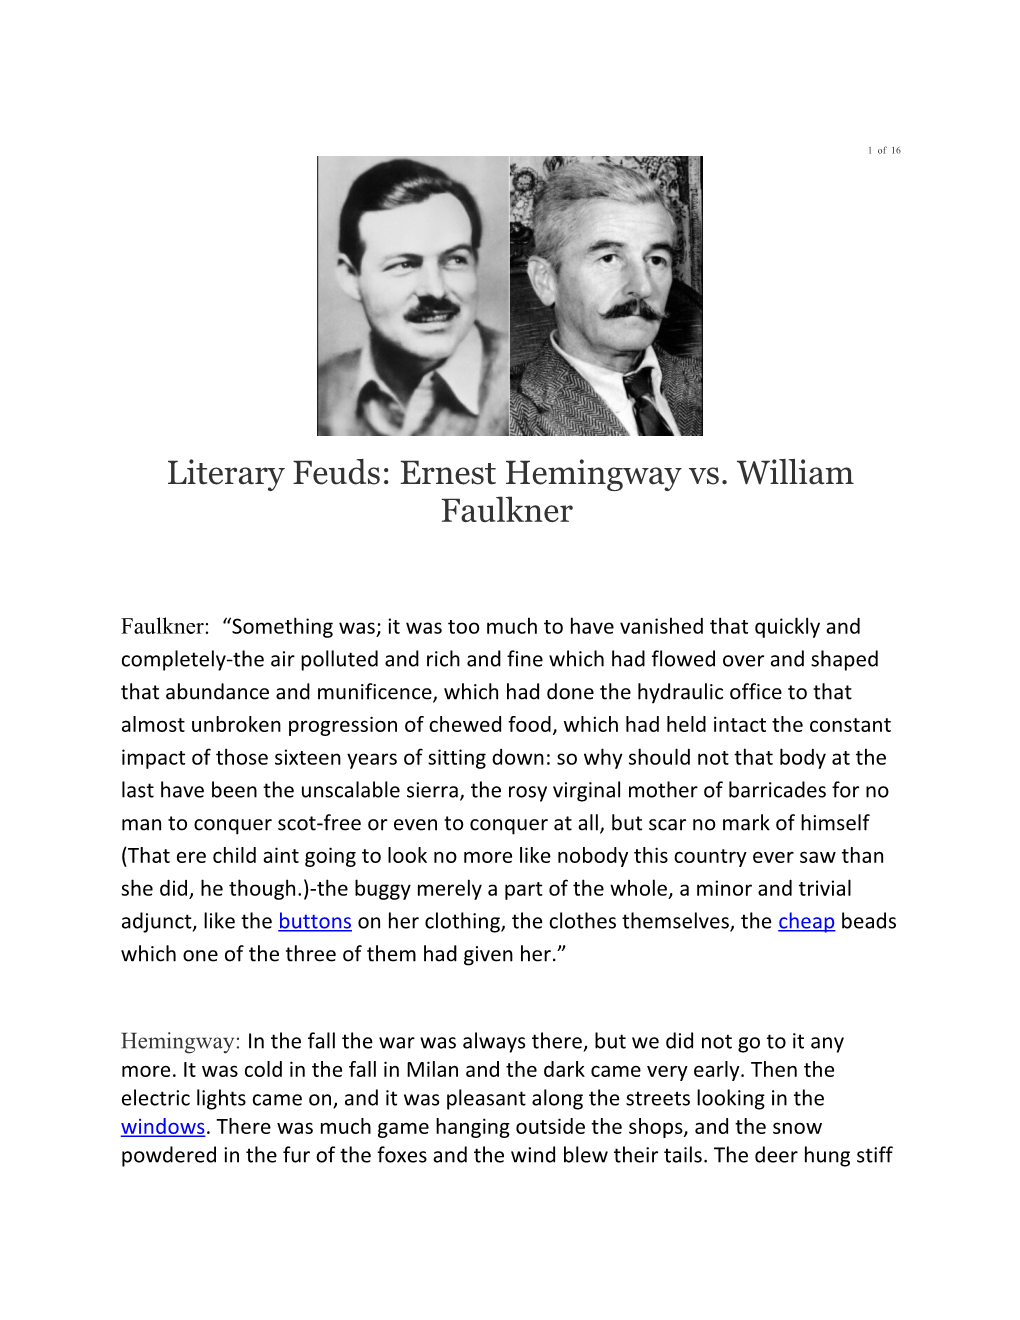 Literary Feuds: Ernest Hemingway Vs. William Faulkner